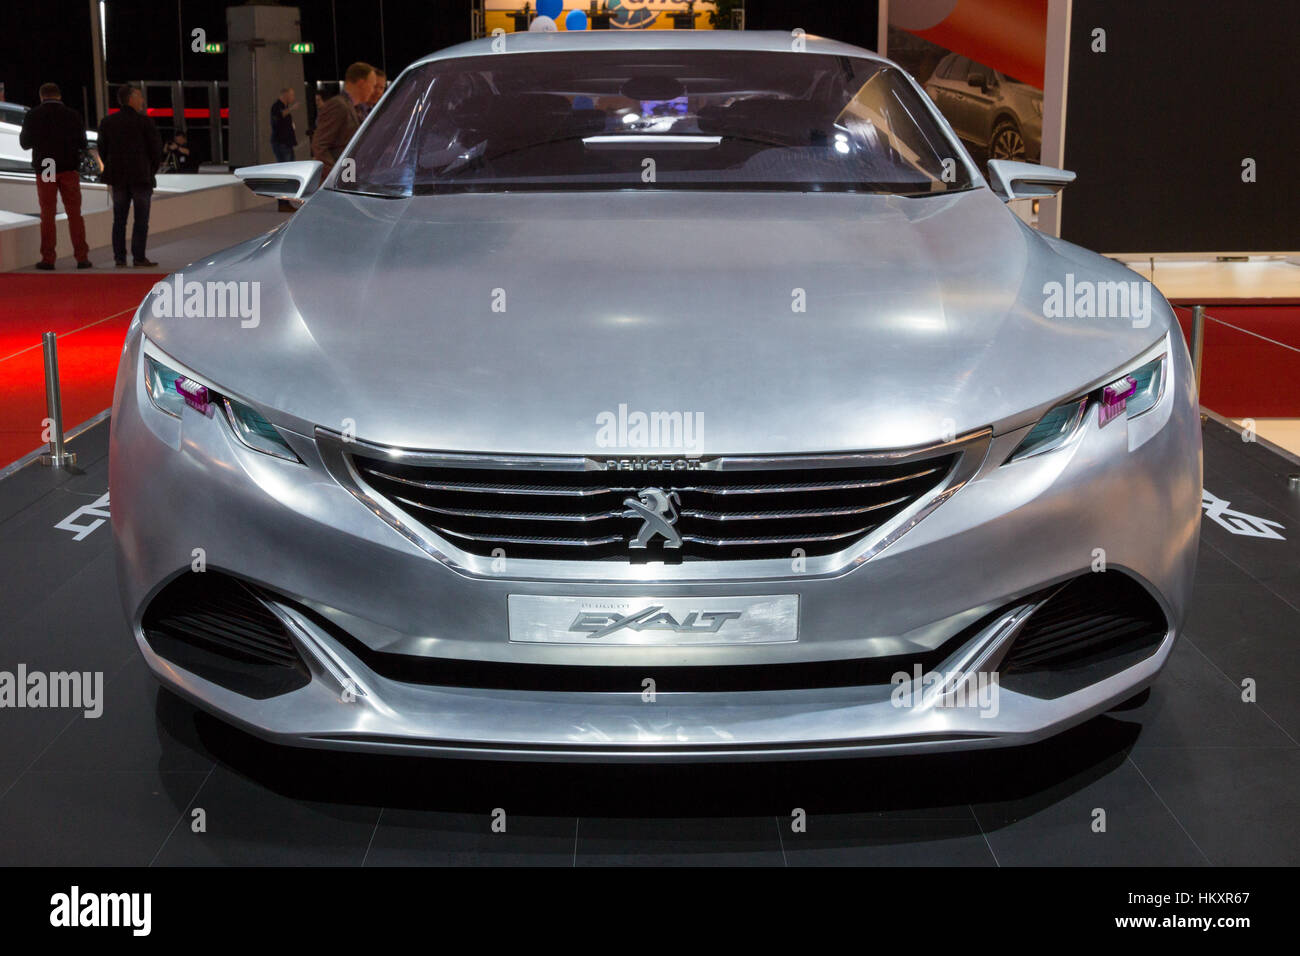 AMSTERDAM - 16. April 2015: Peugeot Exhalt Concept Car auf der AutoRAI 2015. Stockfoto